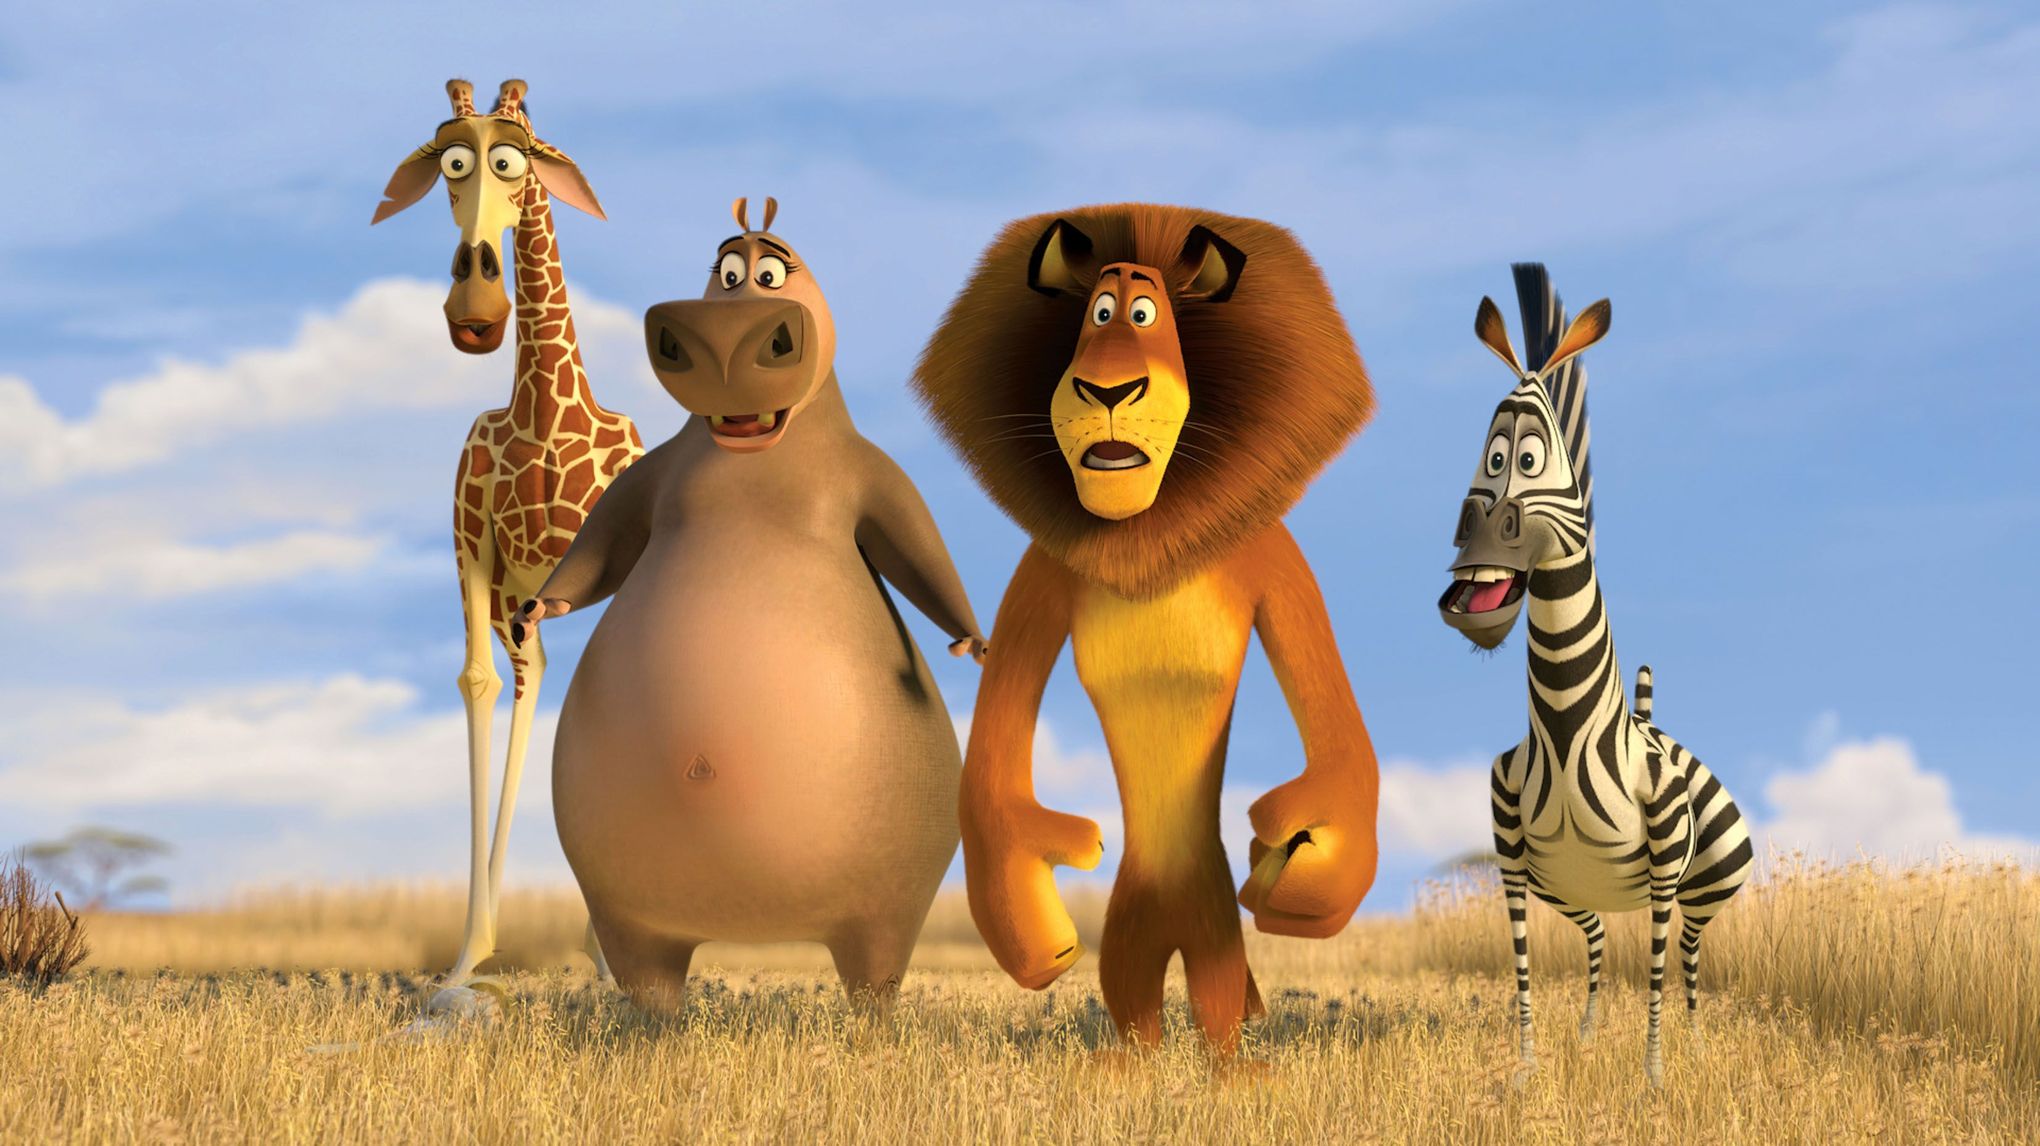 Madagascar image film